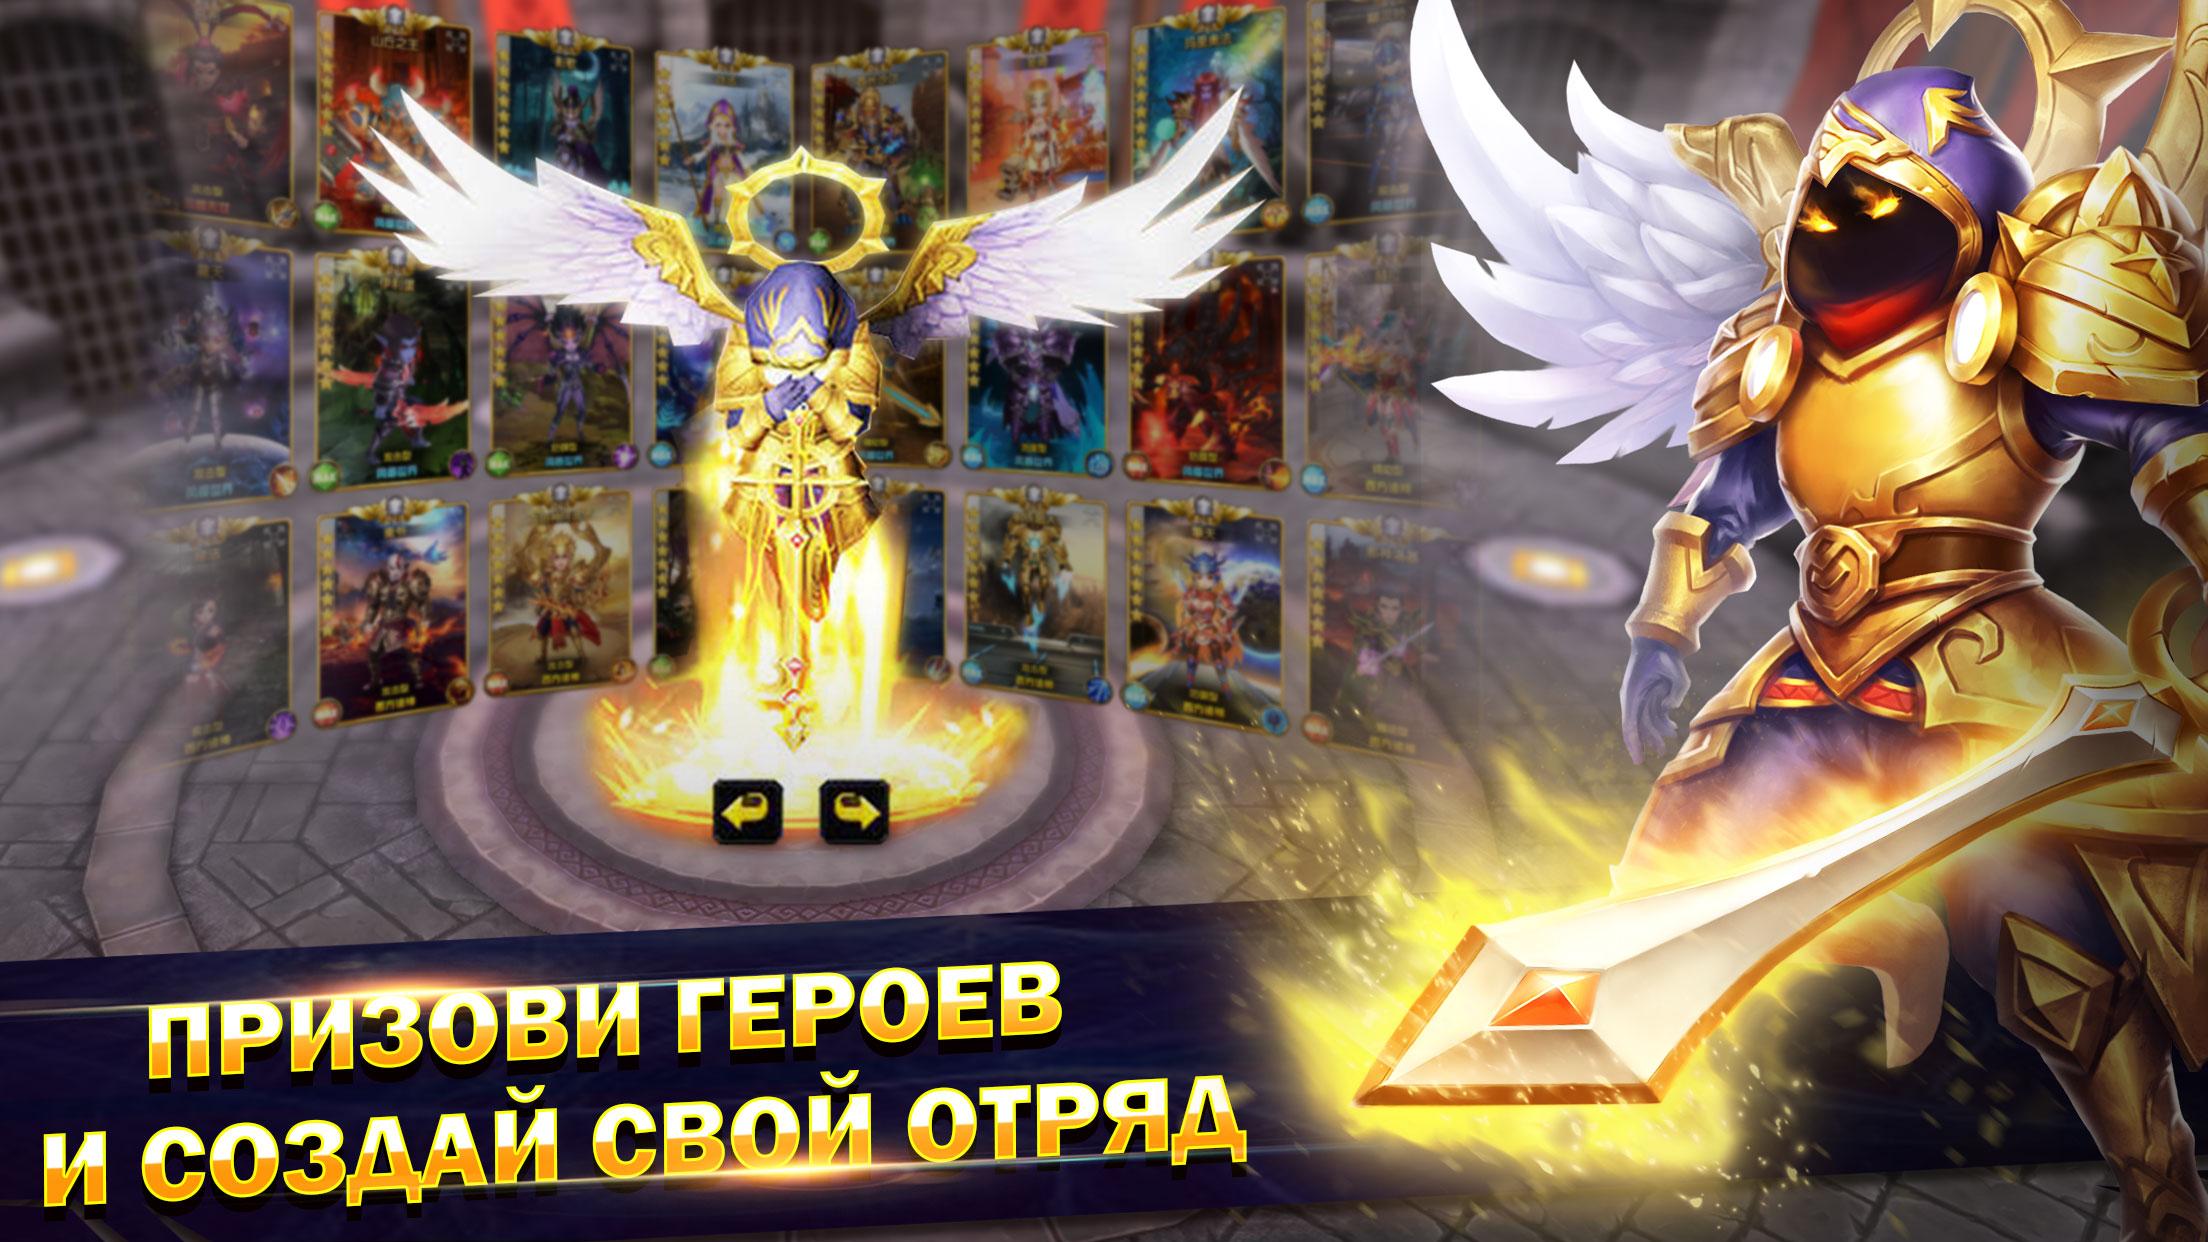 Android application Мастера Снов screenshort